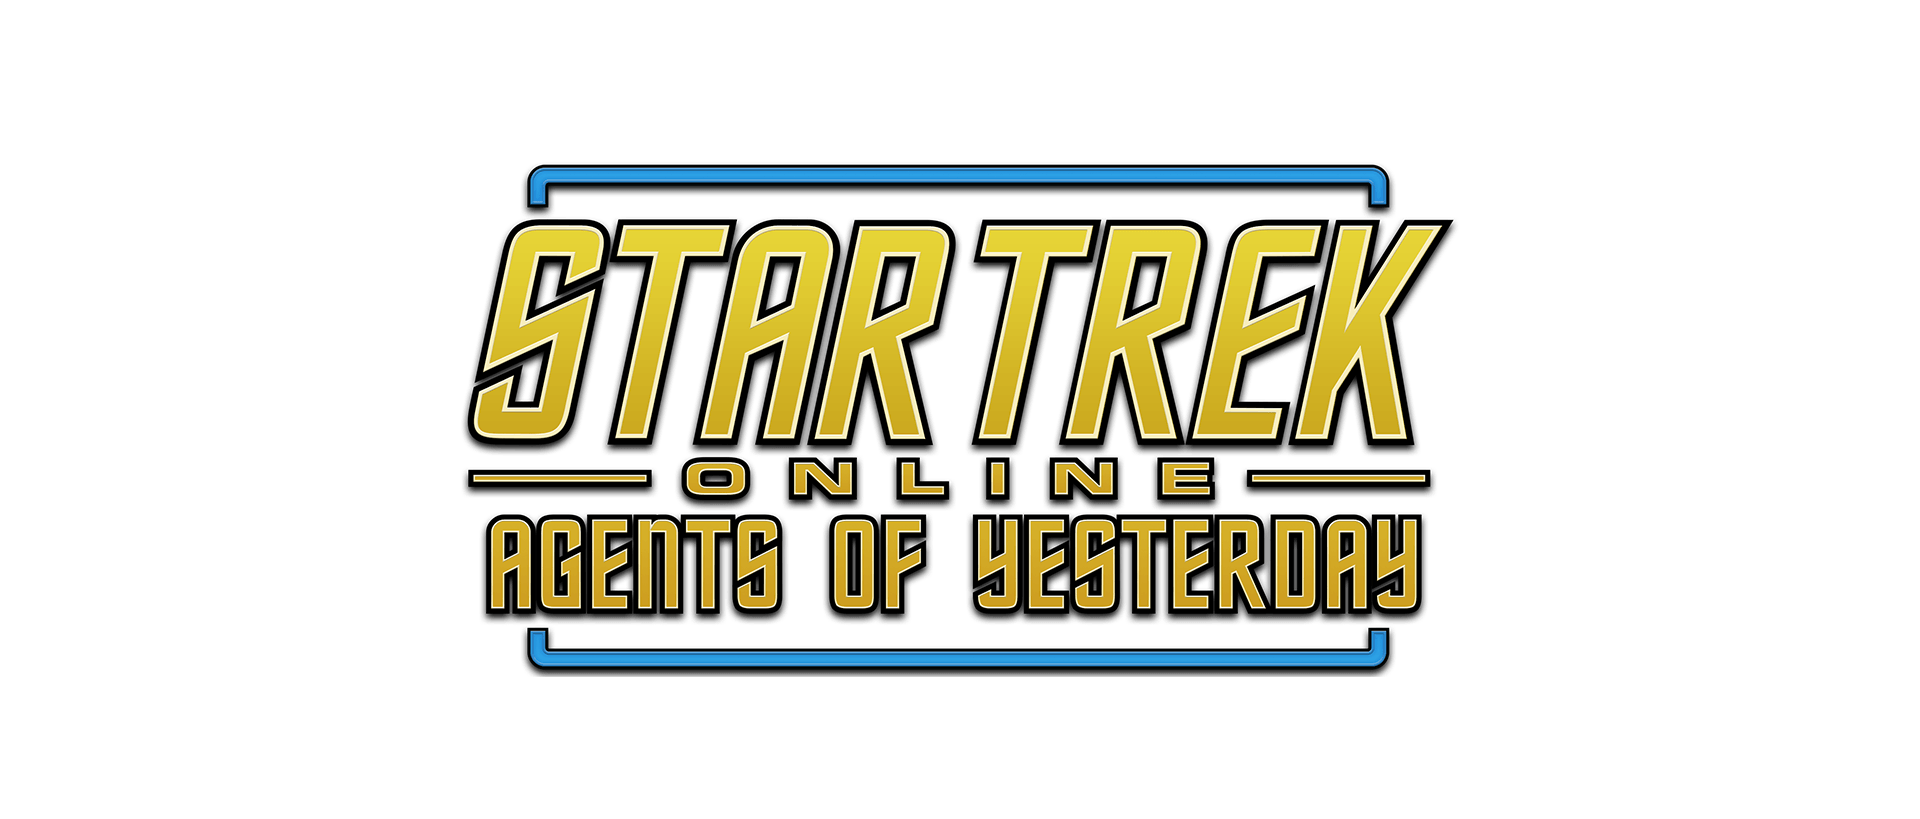 Google Yesterday Logo - Star Trek Online: Agents of Yesterday Announcement | Star Trek Online